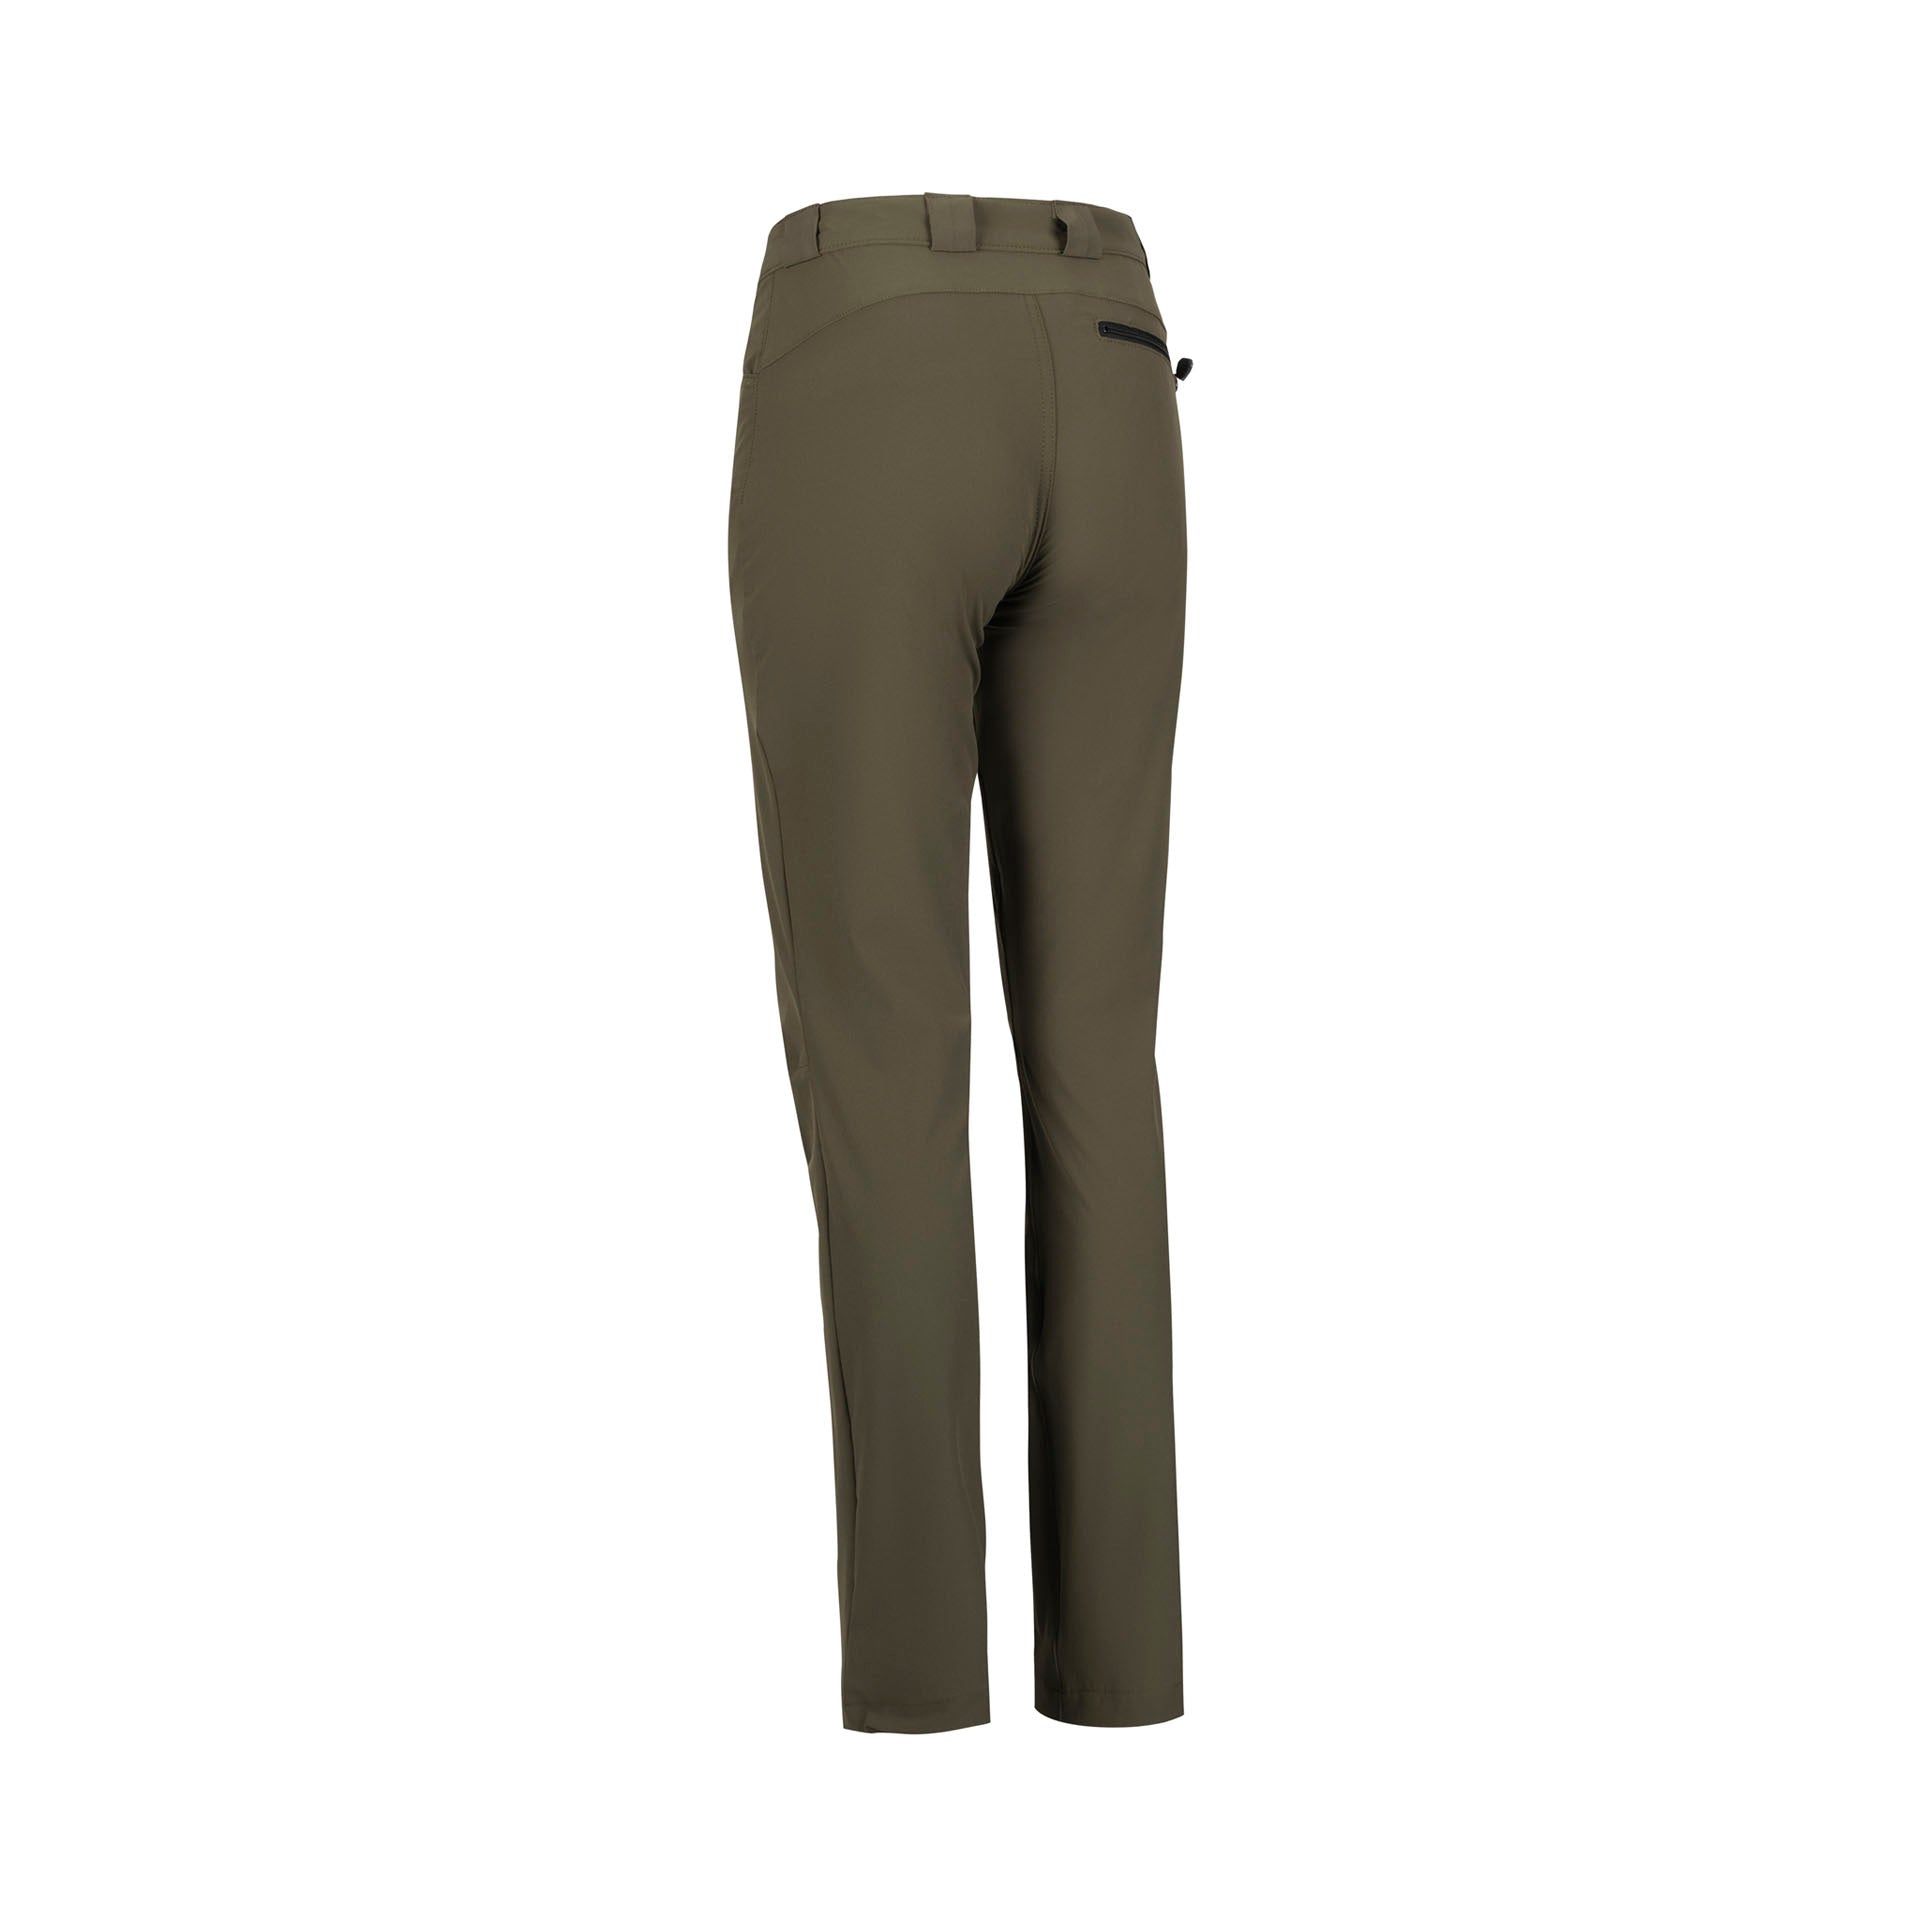 Women's Lightweight Hiking Pants - FORLOH - Green